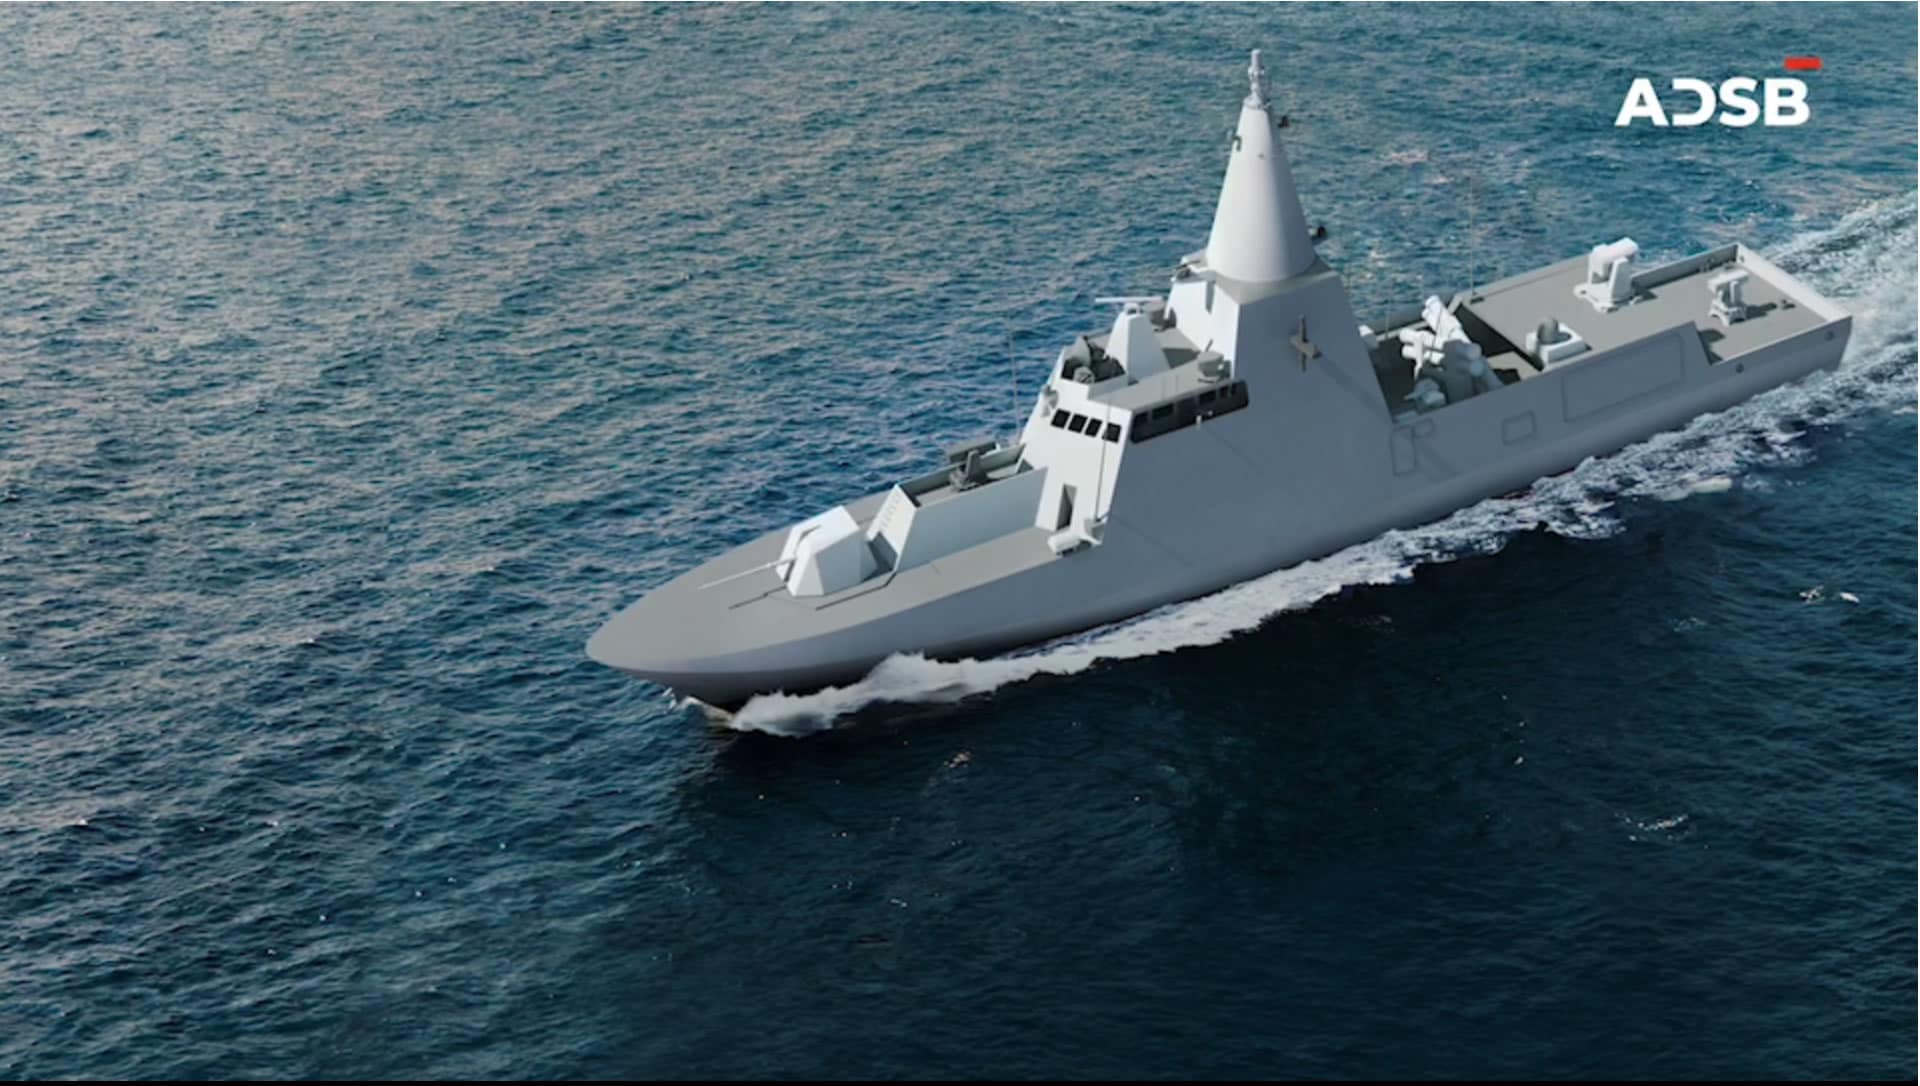 UAE-Navy-Orders-Falaj-3-class-Offshore-Patrol-Vessels-from-ADSB.jpg